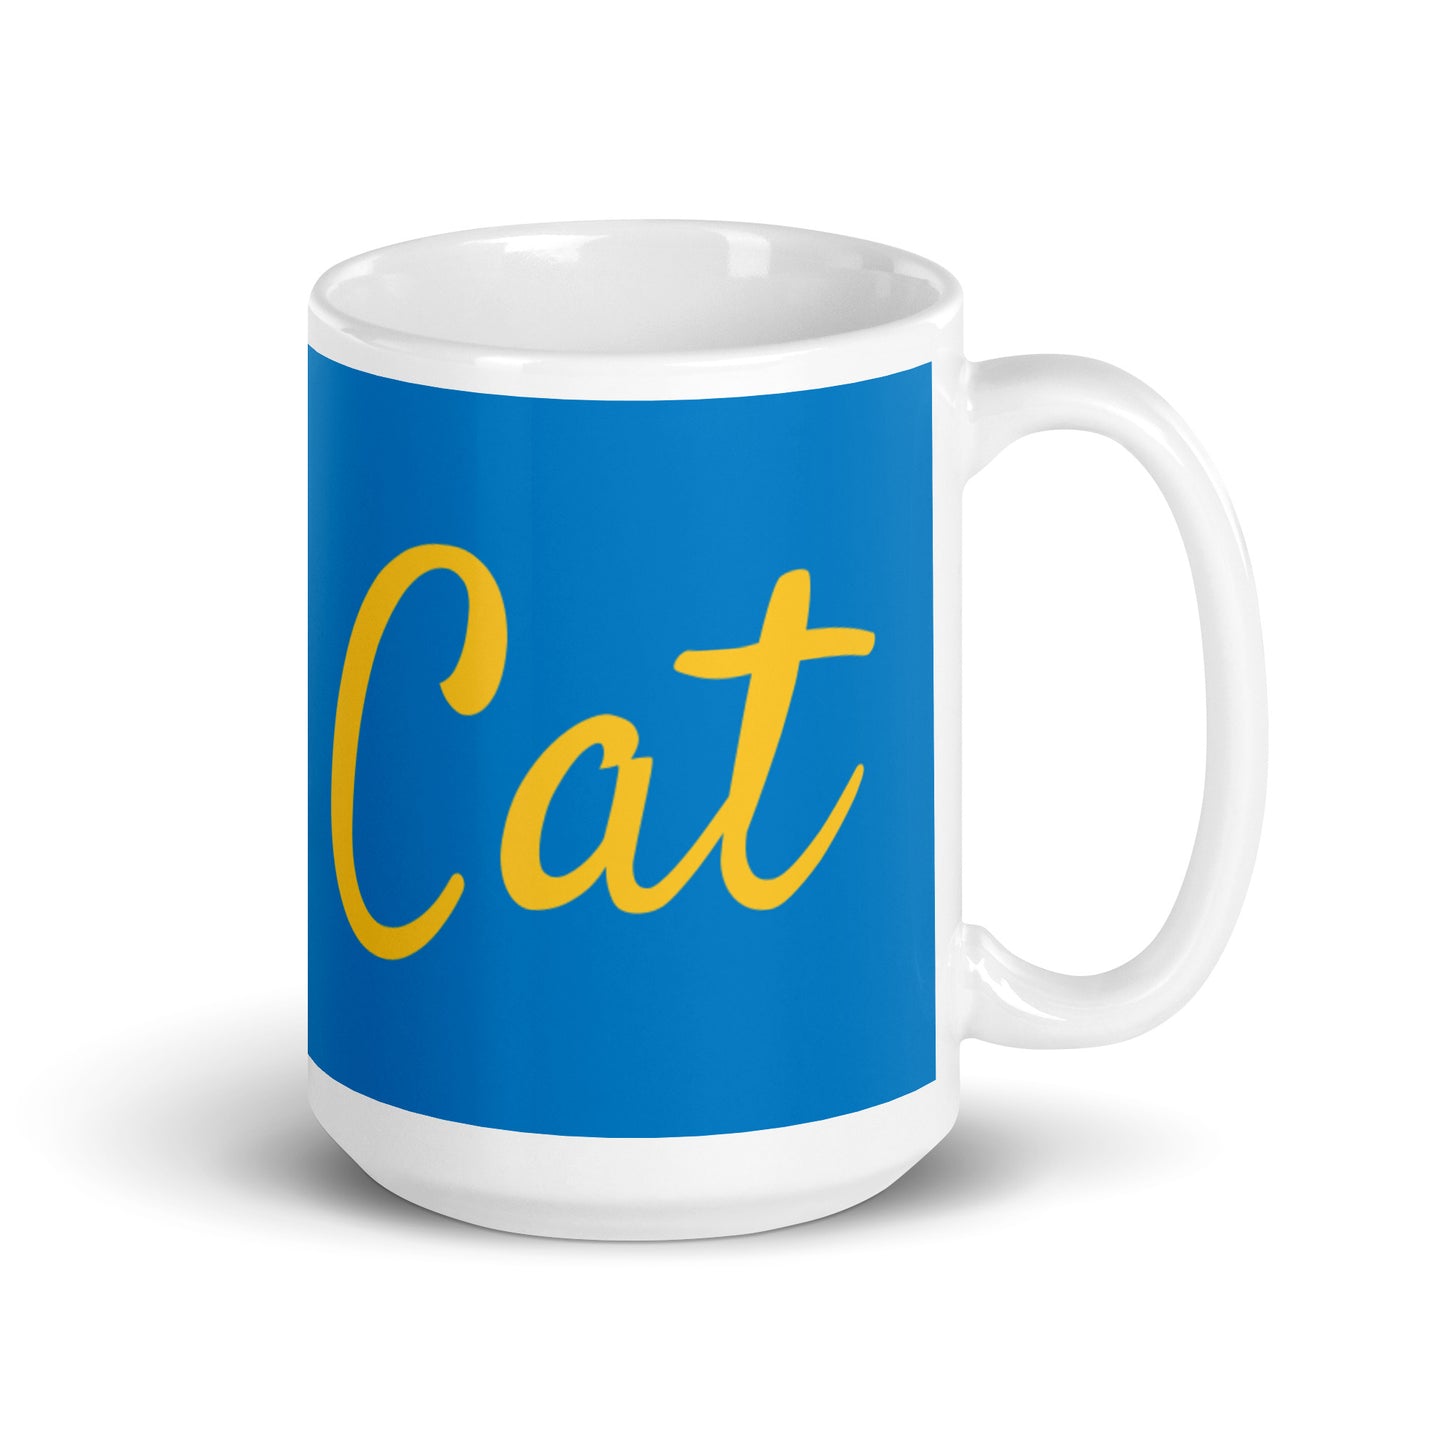 Blue White Glossy Mug - Cool Cat